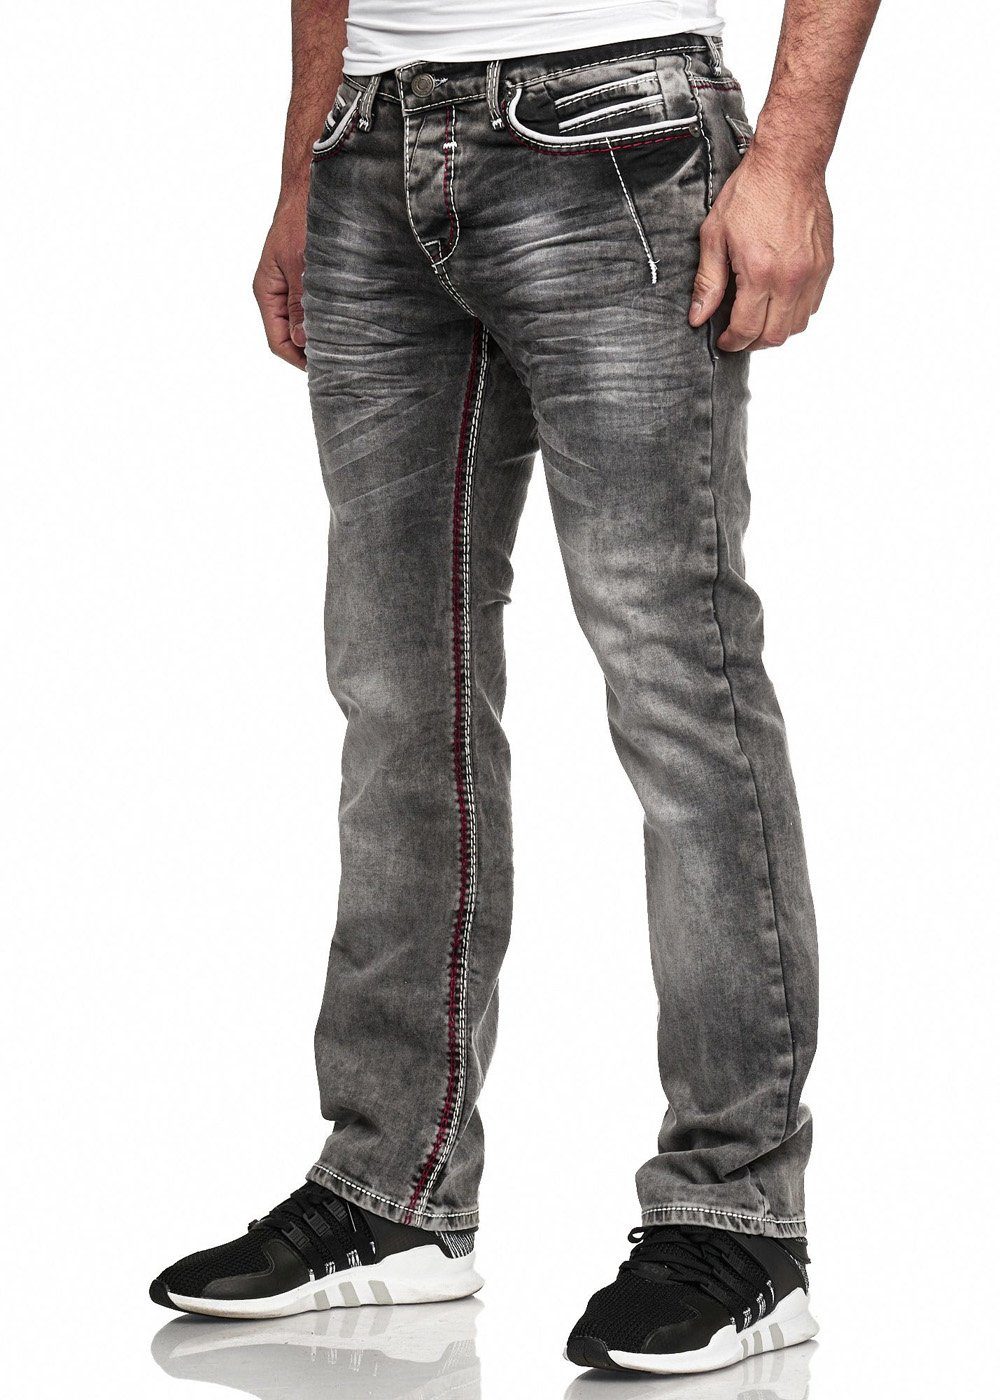 Code47 5056 Jeans Dunkelgrau Regular-fit-Jeans verschiedene Modelle